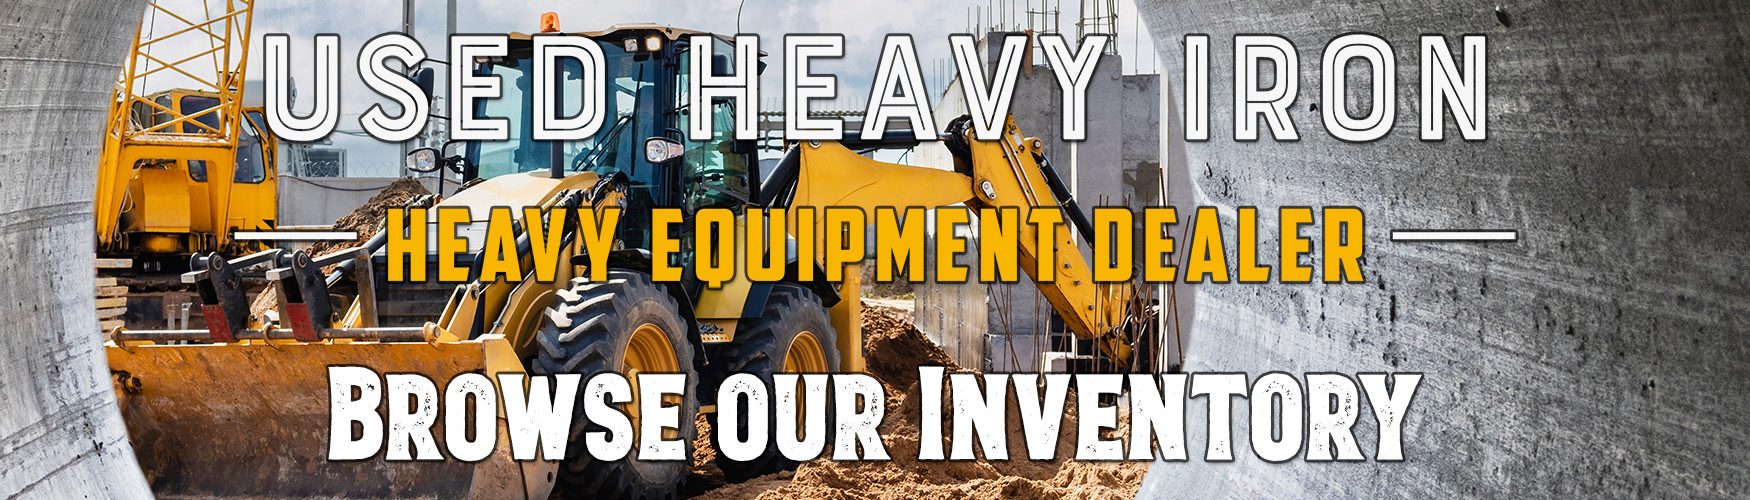 Used Heavy Equipment For Sale in Texas | CAT, Volvo, Deere, Komatsu, Hitachi | Dealer, Broker, Trader | Houston, Austin, Dallas, Ft. Worth, San Antonio | Construction, Farming, Highway, and Paving | Used Heavy Iron